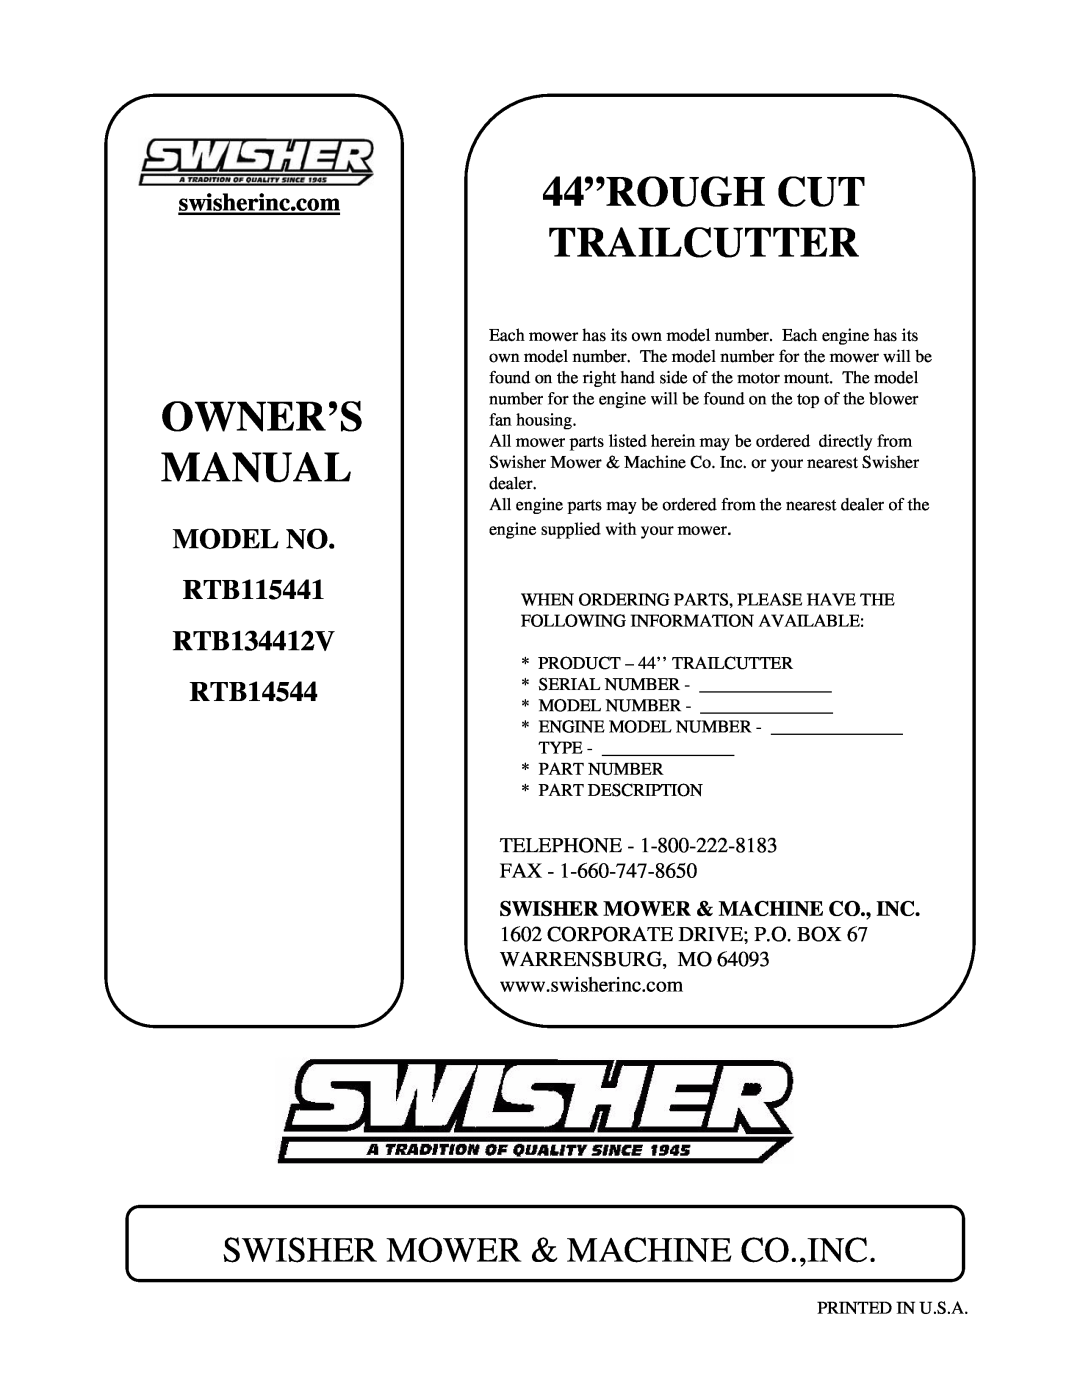 Swisher RTB14544, RTB115441 44”ROUGH CUT TRAILCUTTER, Swisher Mower & Machine Co., Inc, Owner’S Manual, swisherinc.com 